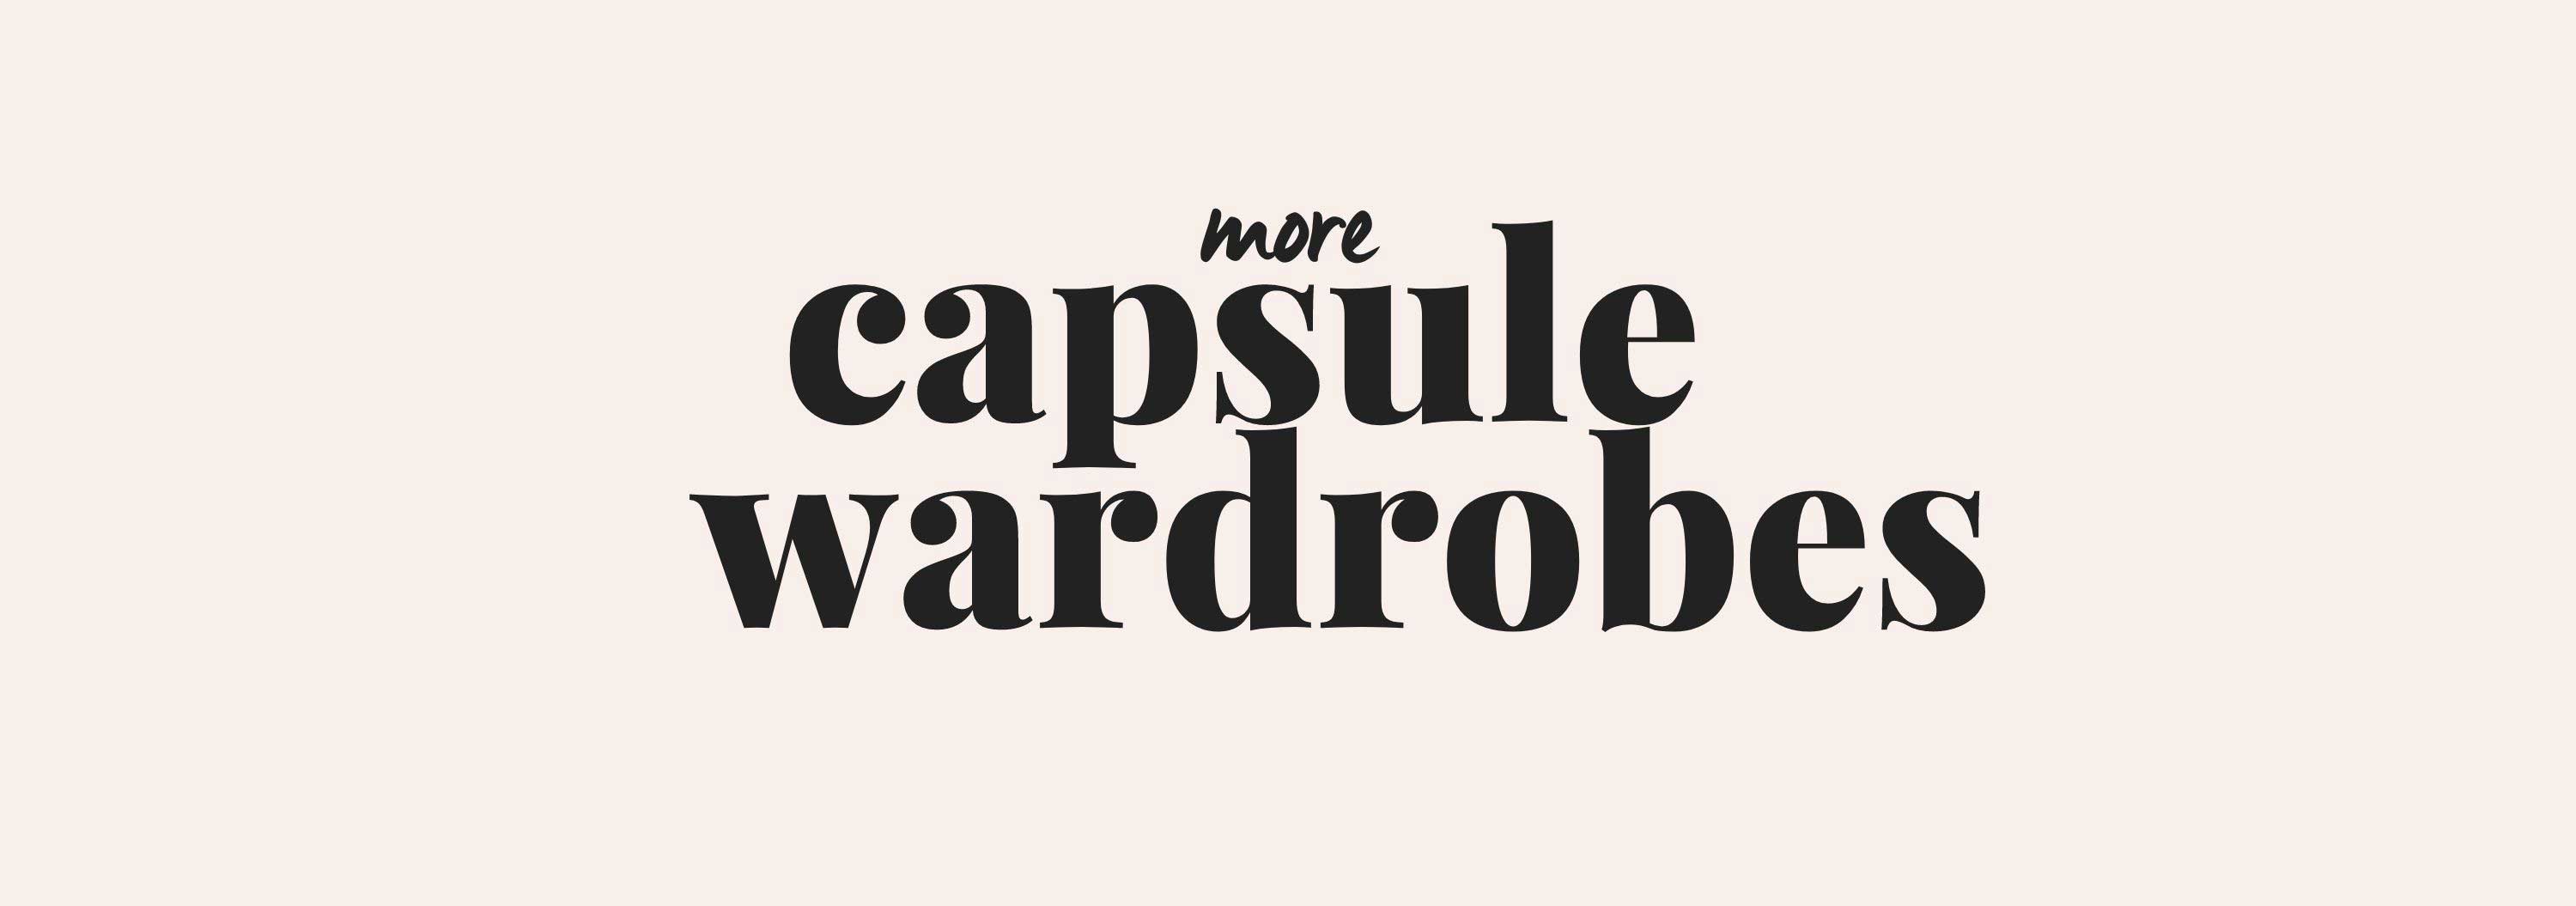 see more capsule wardrobes